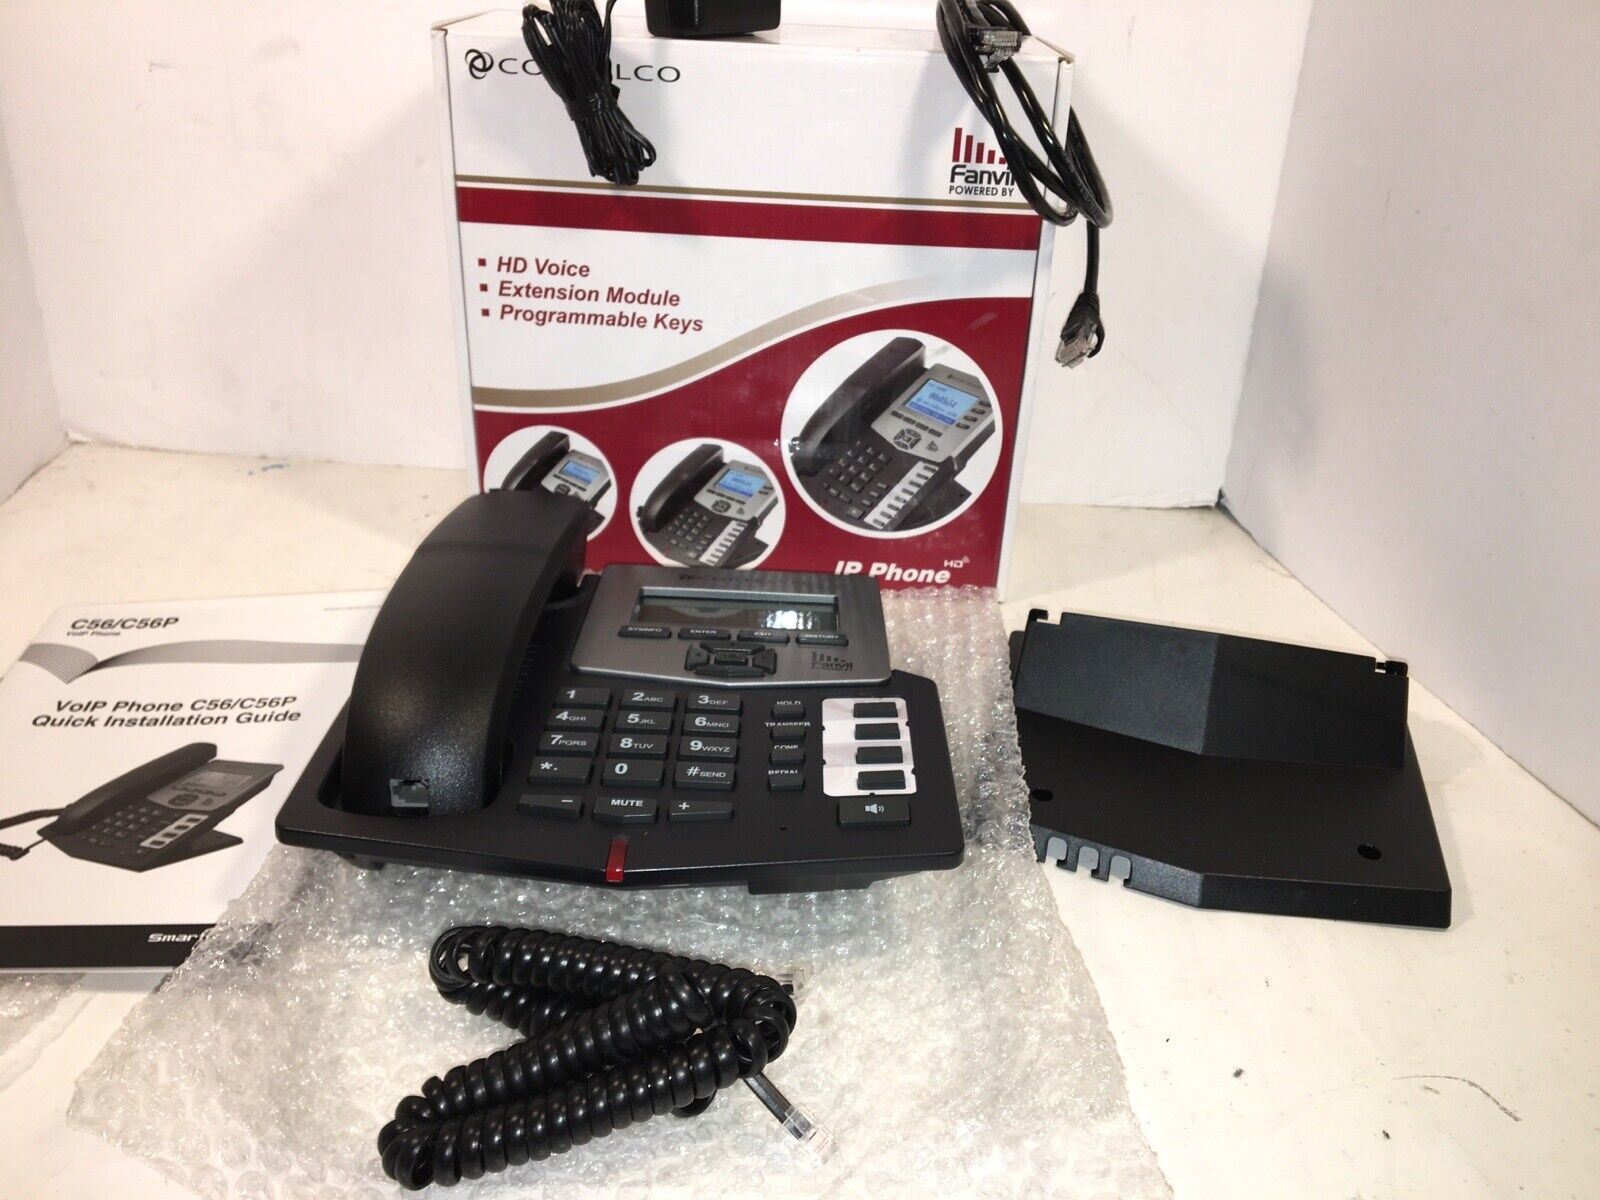 Cortelco IP Phone with HD Voice Business Telephone Model ITT-C56P - NEW